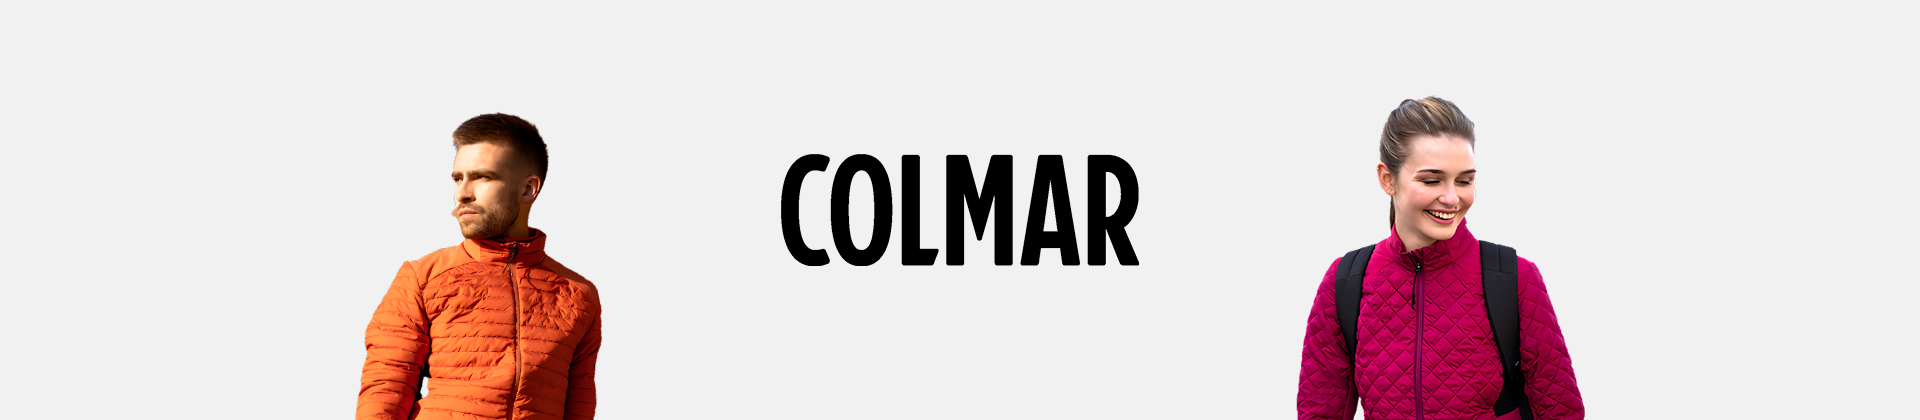 Colmar scarpe donna online - sneaker